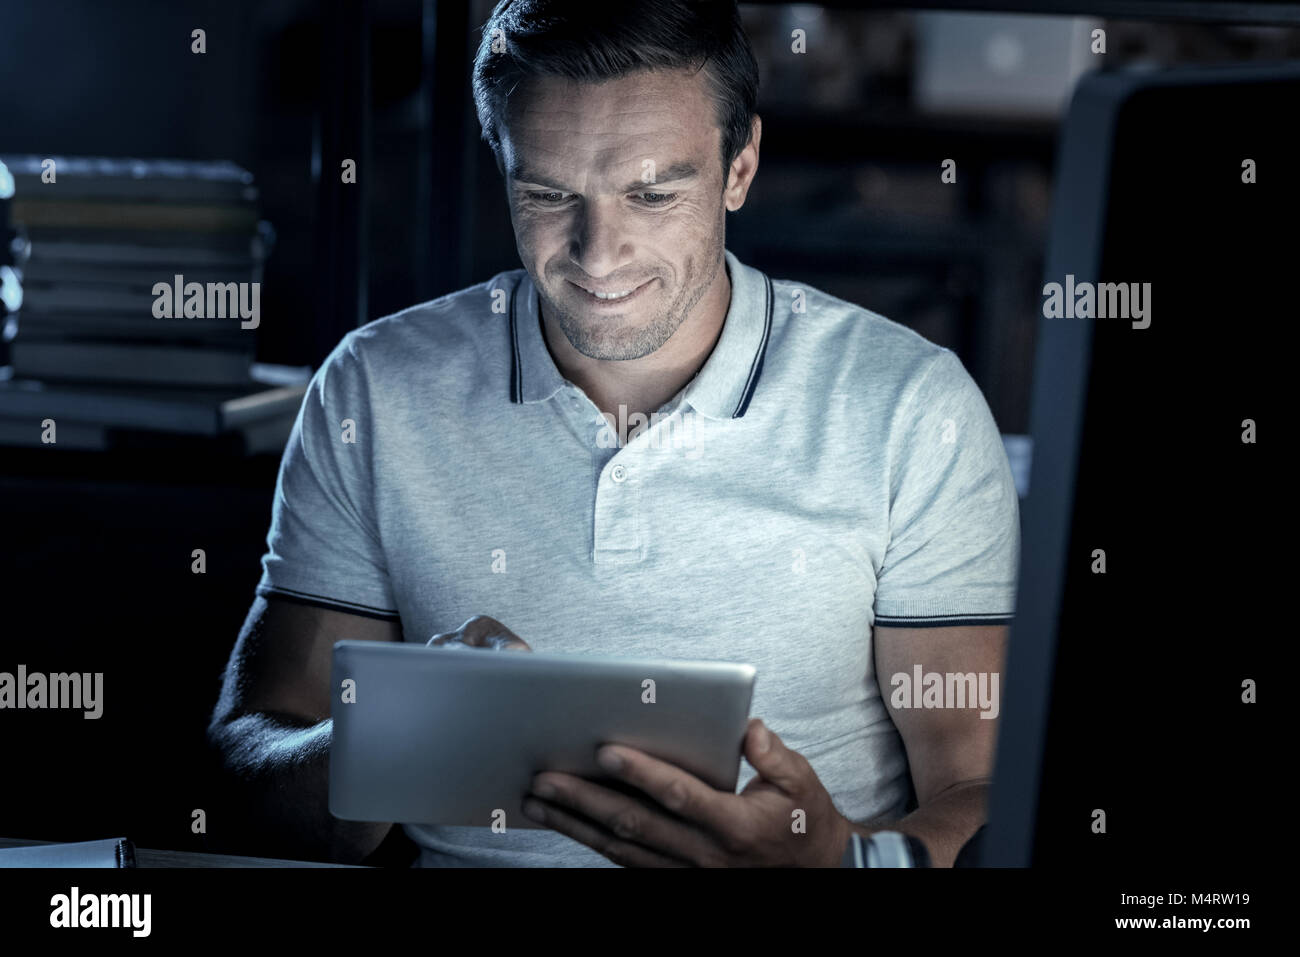 Joyful millennial man smiling while working on touchpad Stock Photo